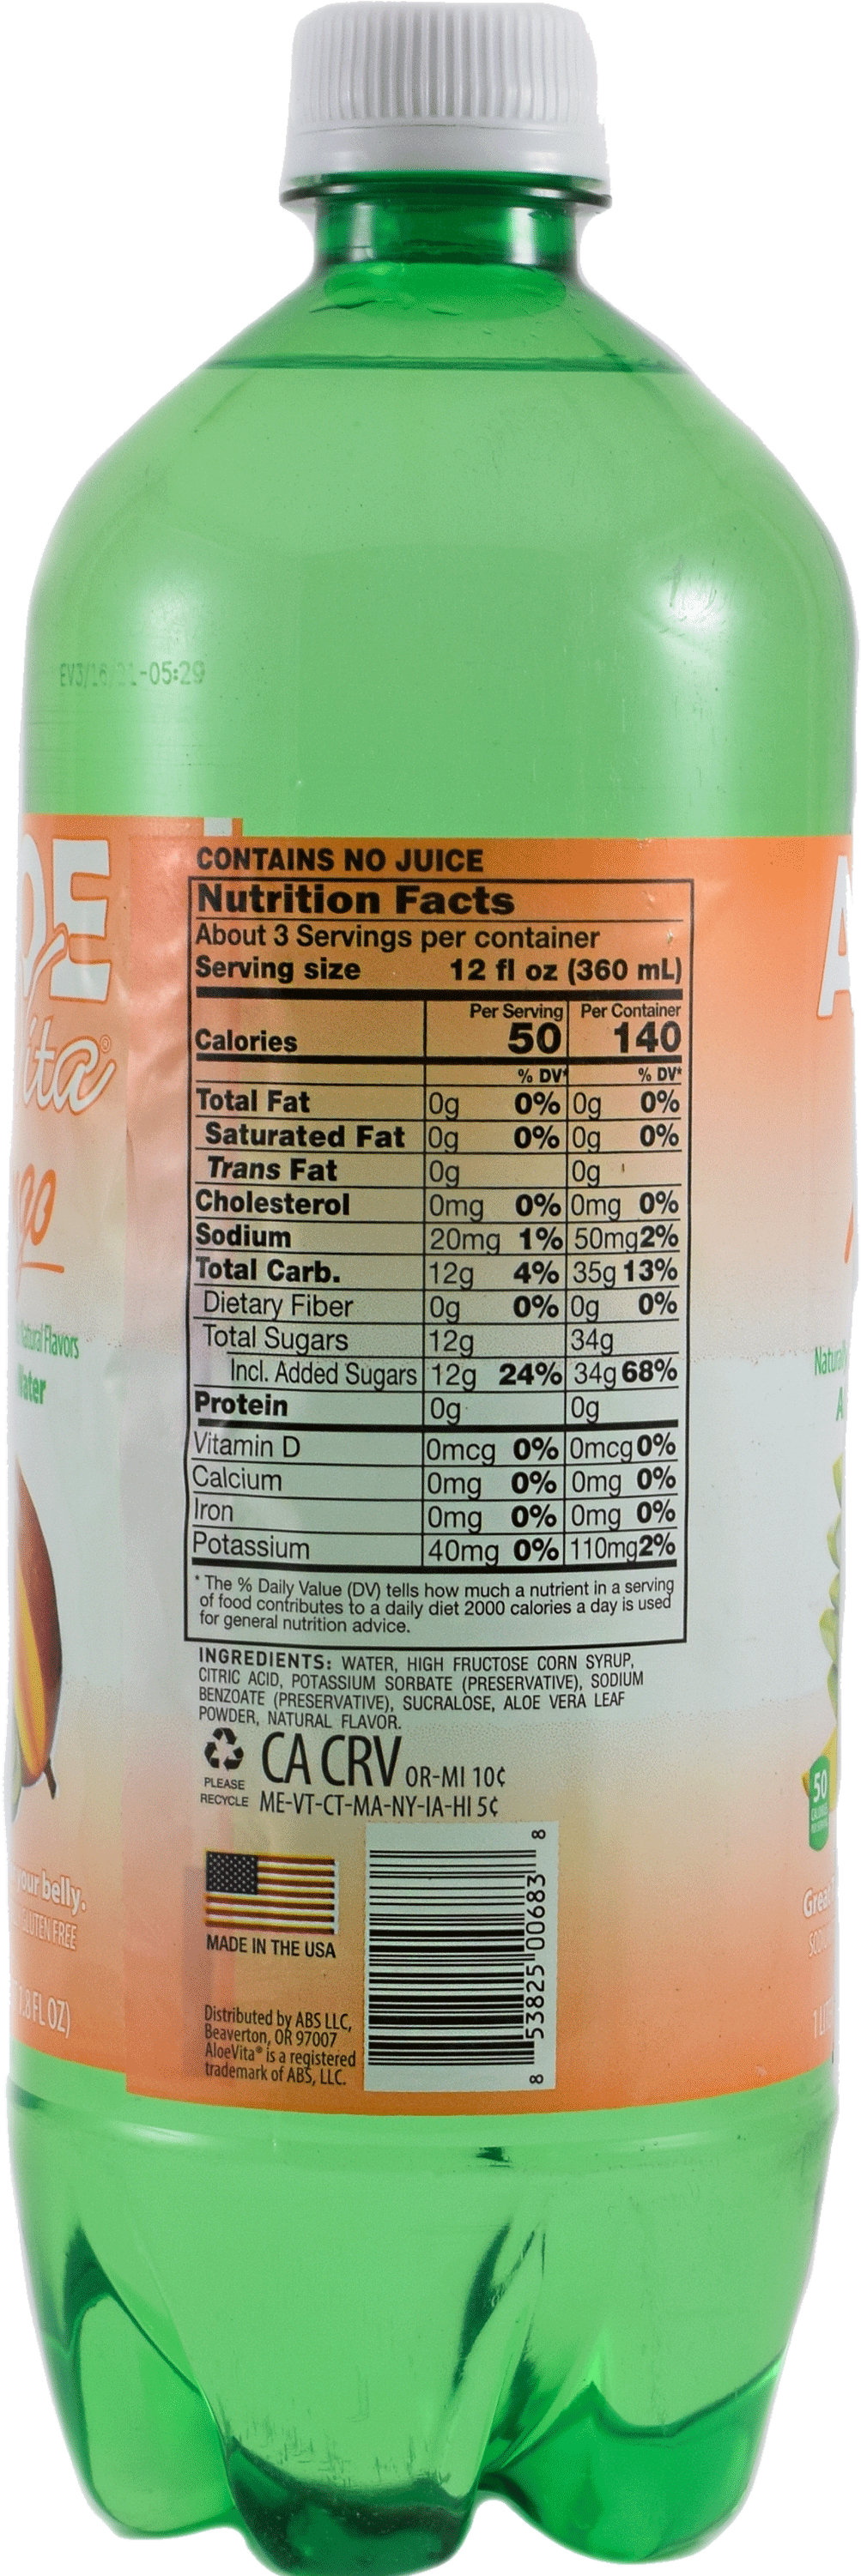 AloeVita 1 liter mango nutritional facts